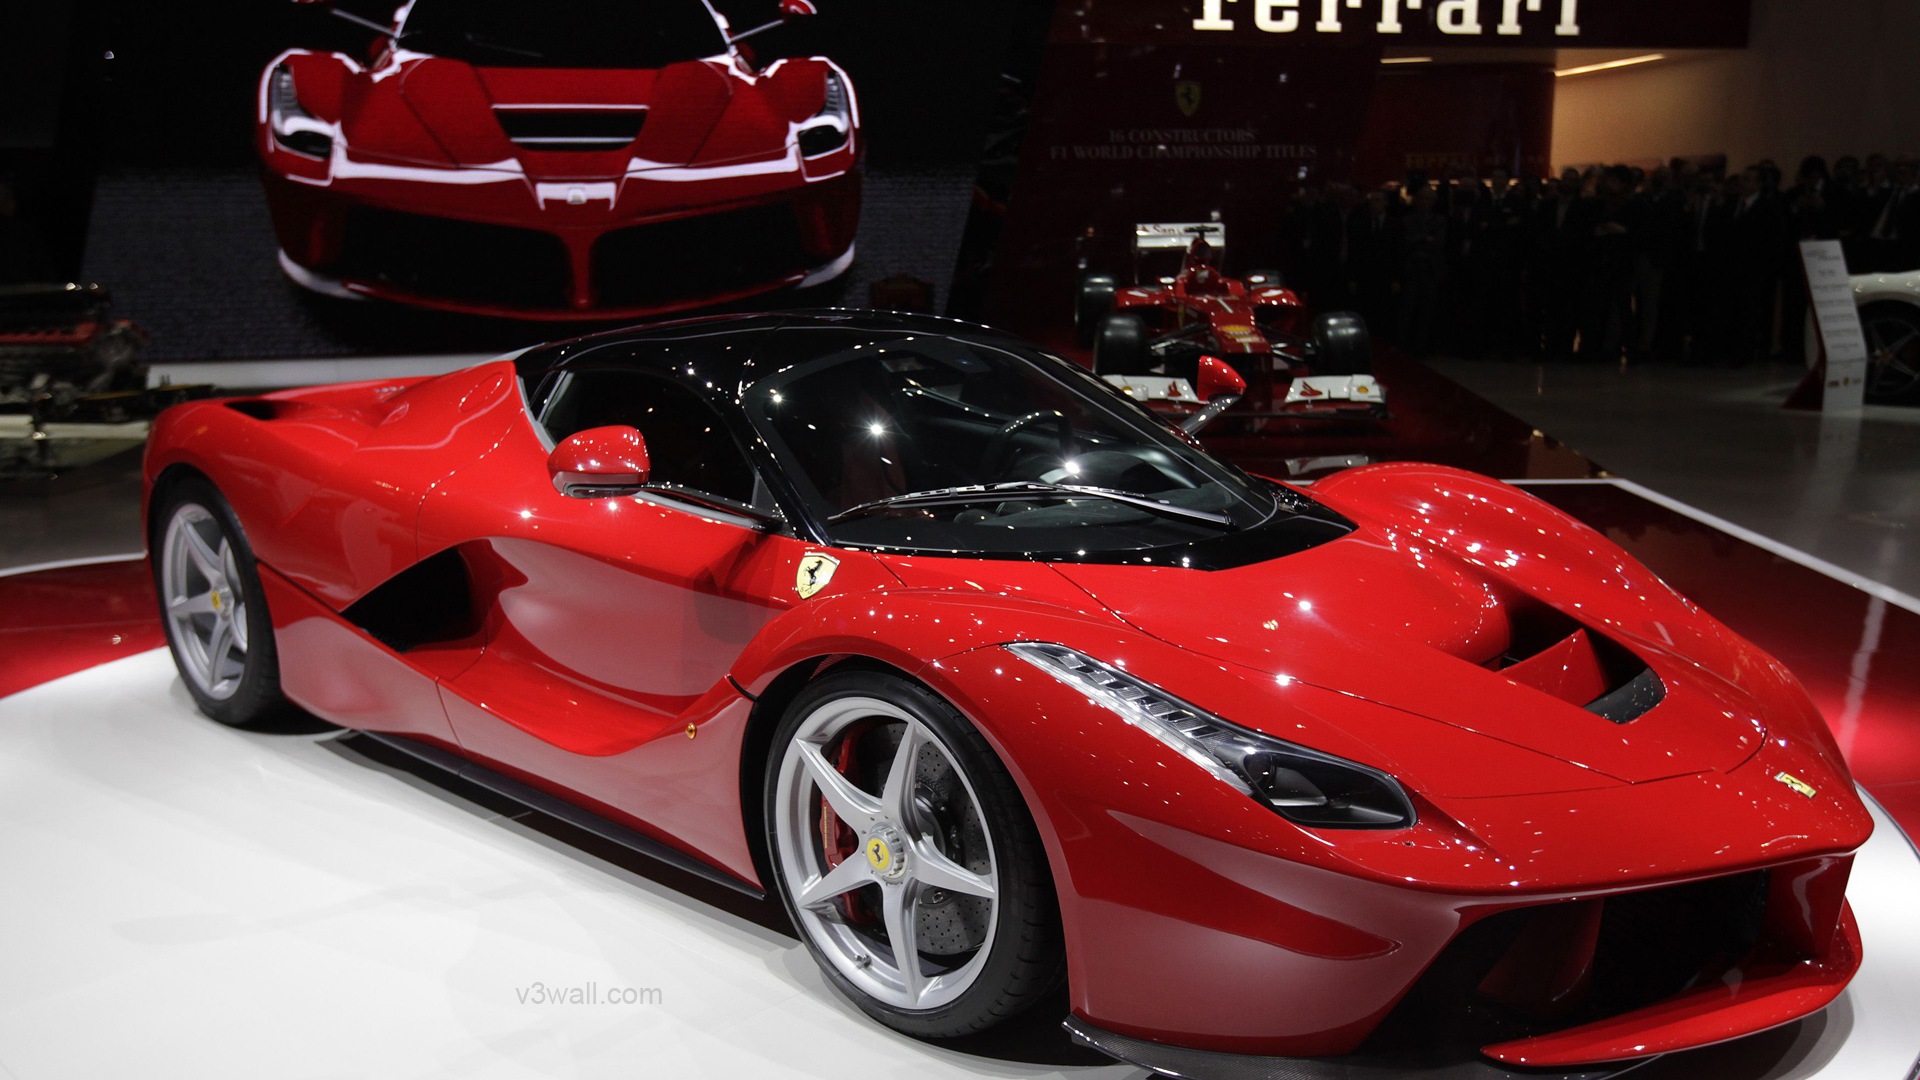 2013 Ferrari LaFerrari 法拉利LaFerrari红色超级跑车高清壁纸2 - 1920x1080